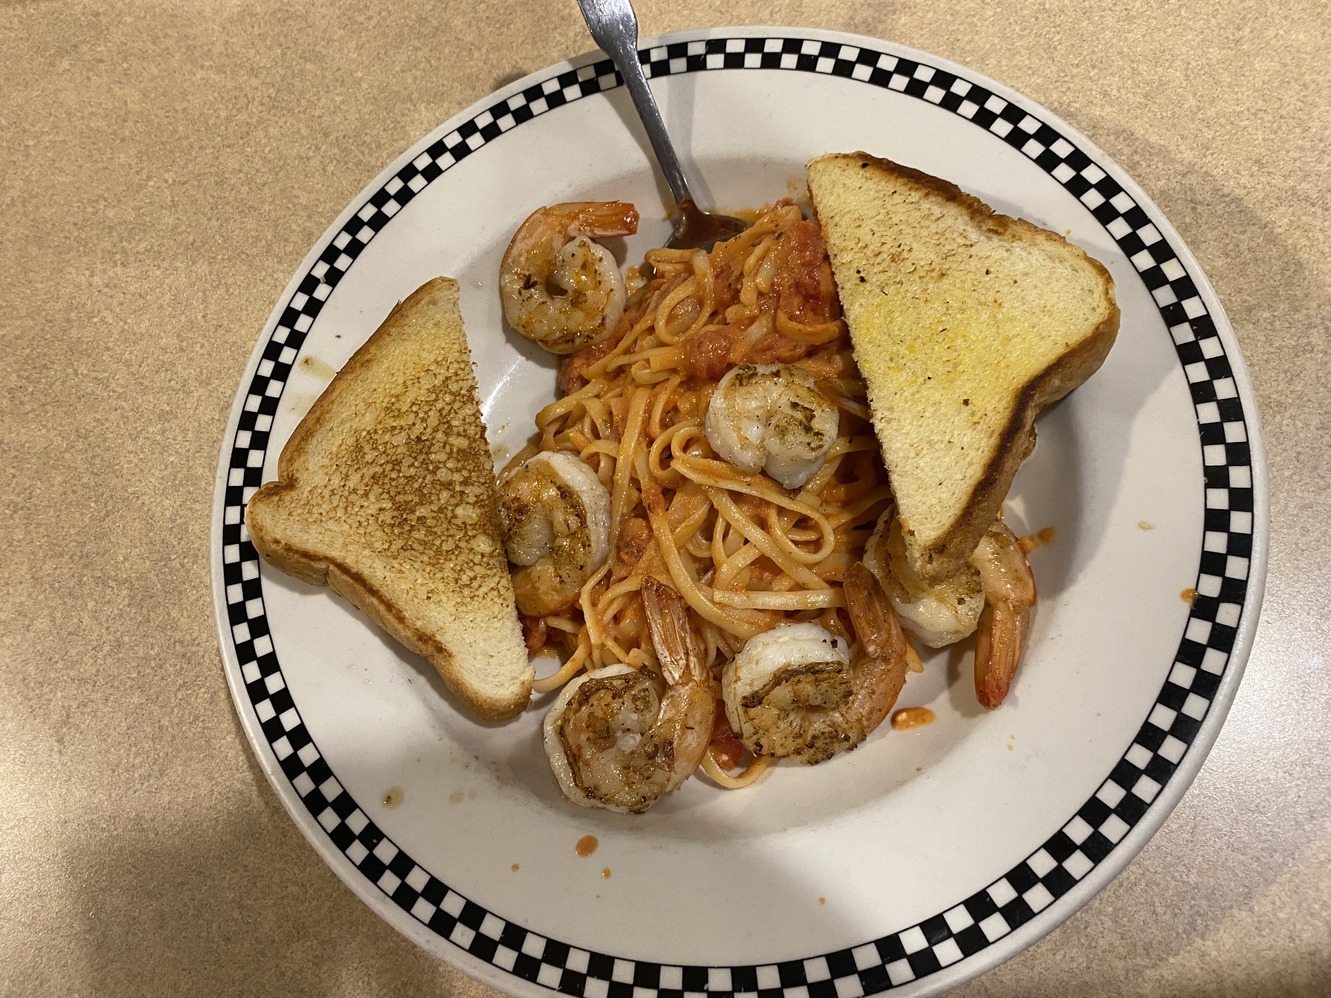 Shrimp and
        linguine and garlic toast at Mel's Diner.